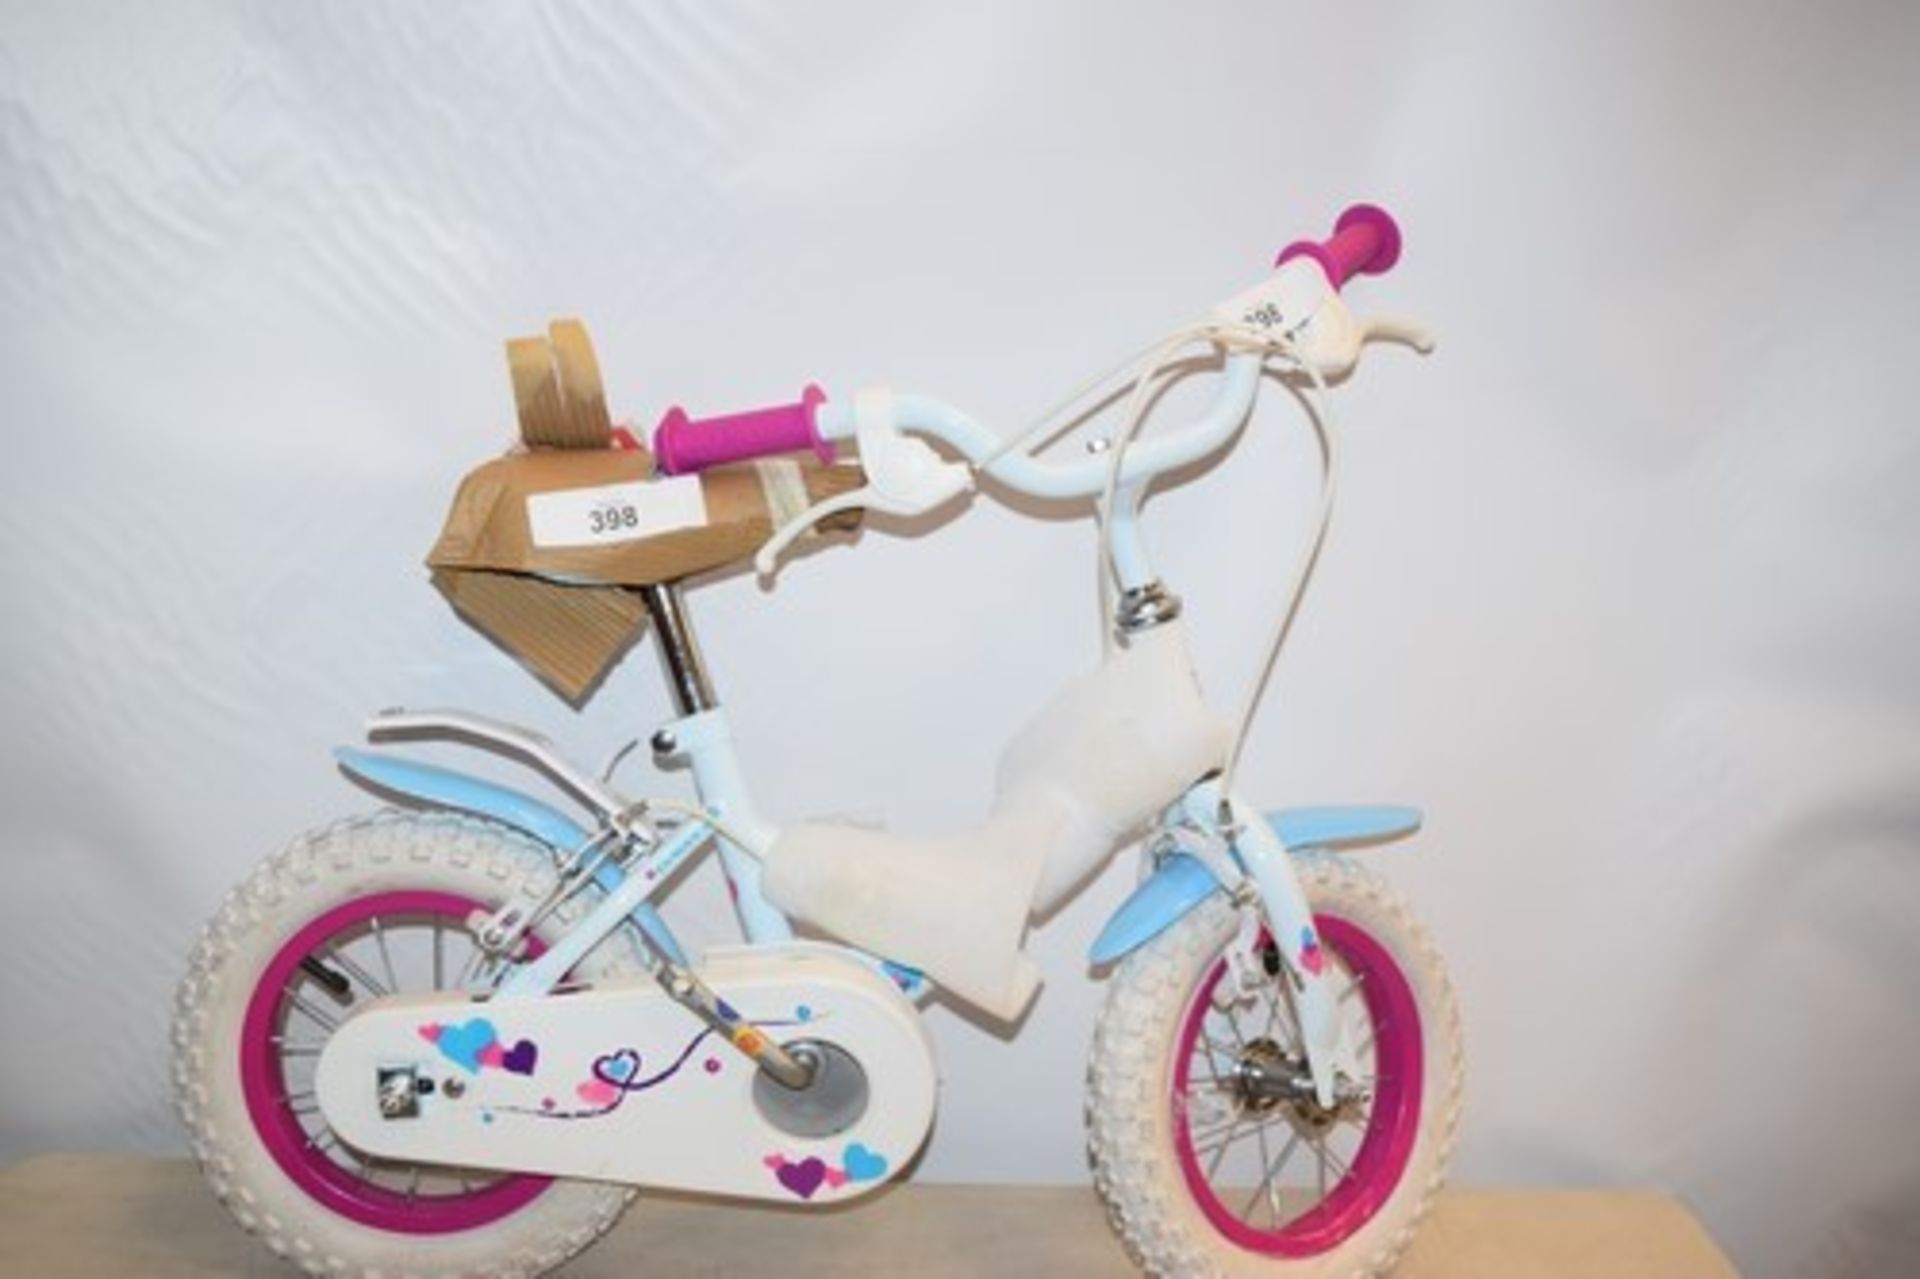 1 x Dawes Princess girls bike - New, slightly dirty due to storage (ES13)